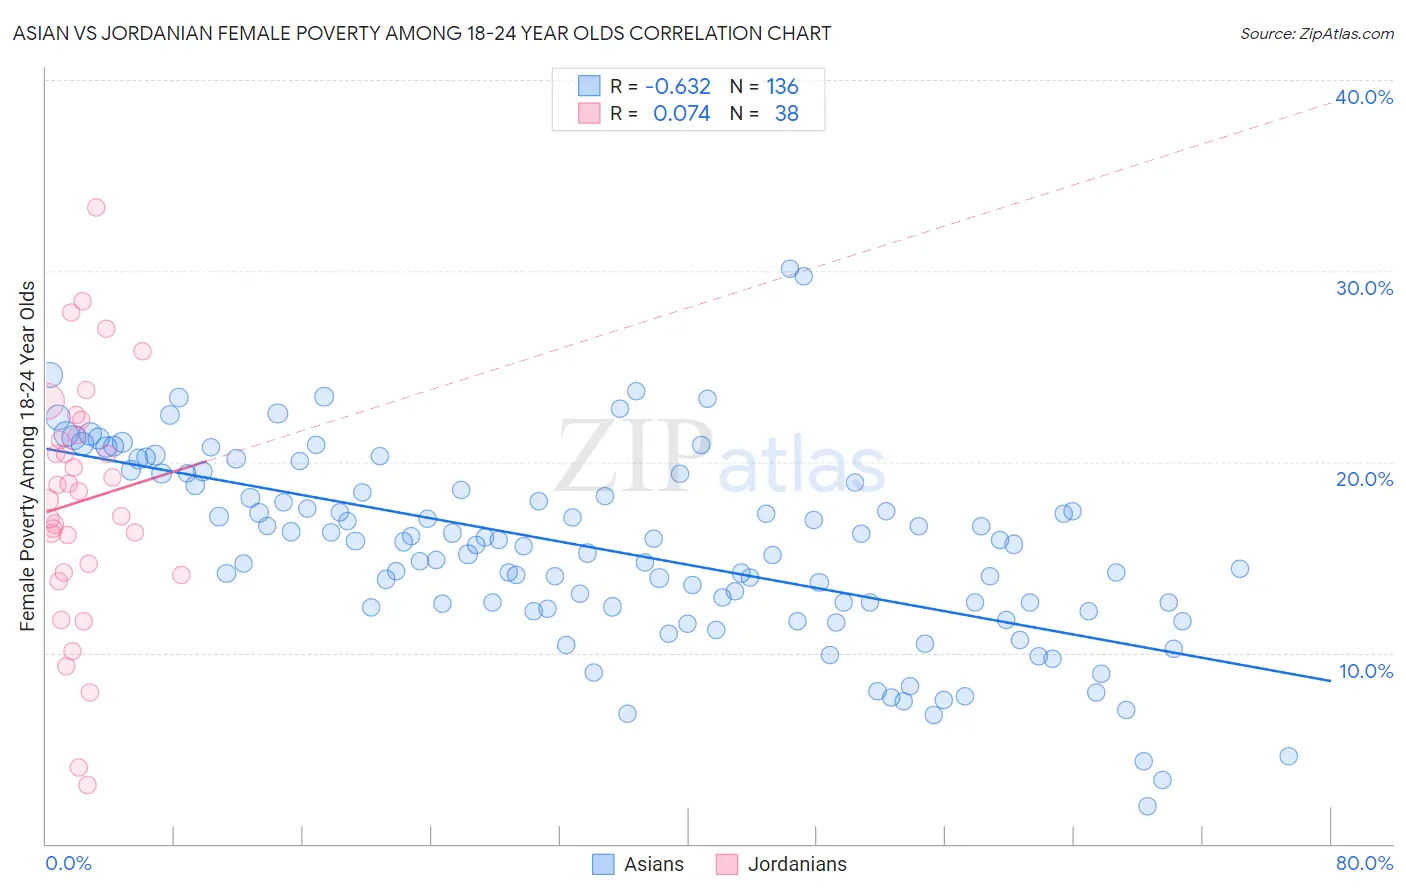 Asian vs Jordanian Female Poverty Among 18-24 Year Olds